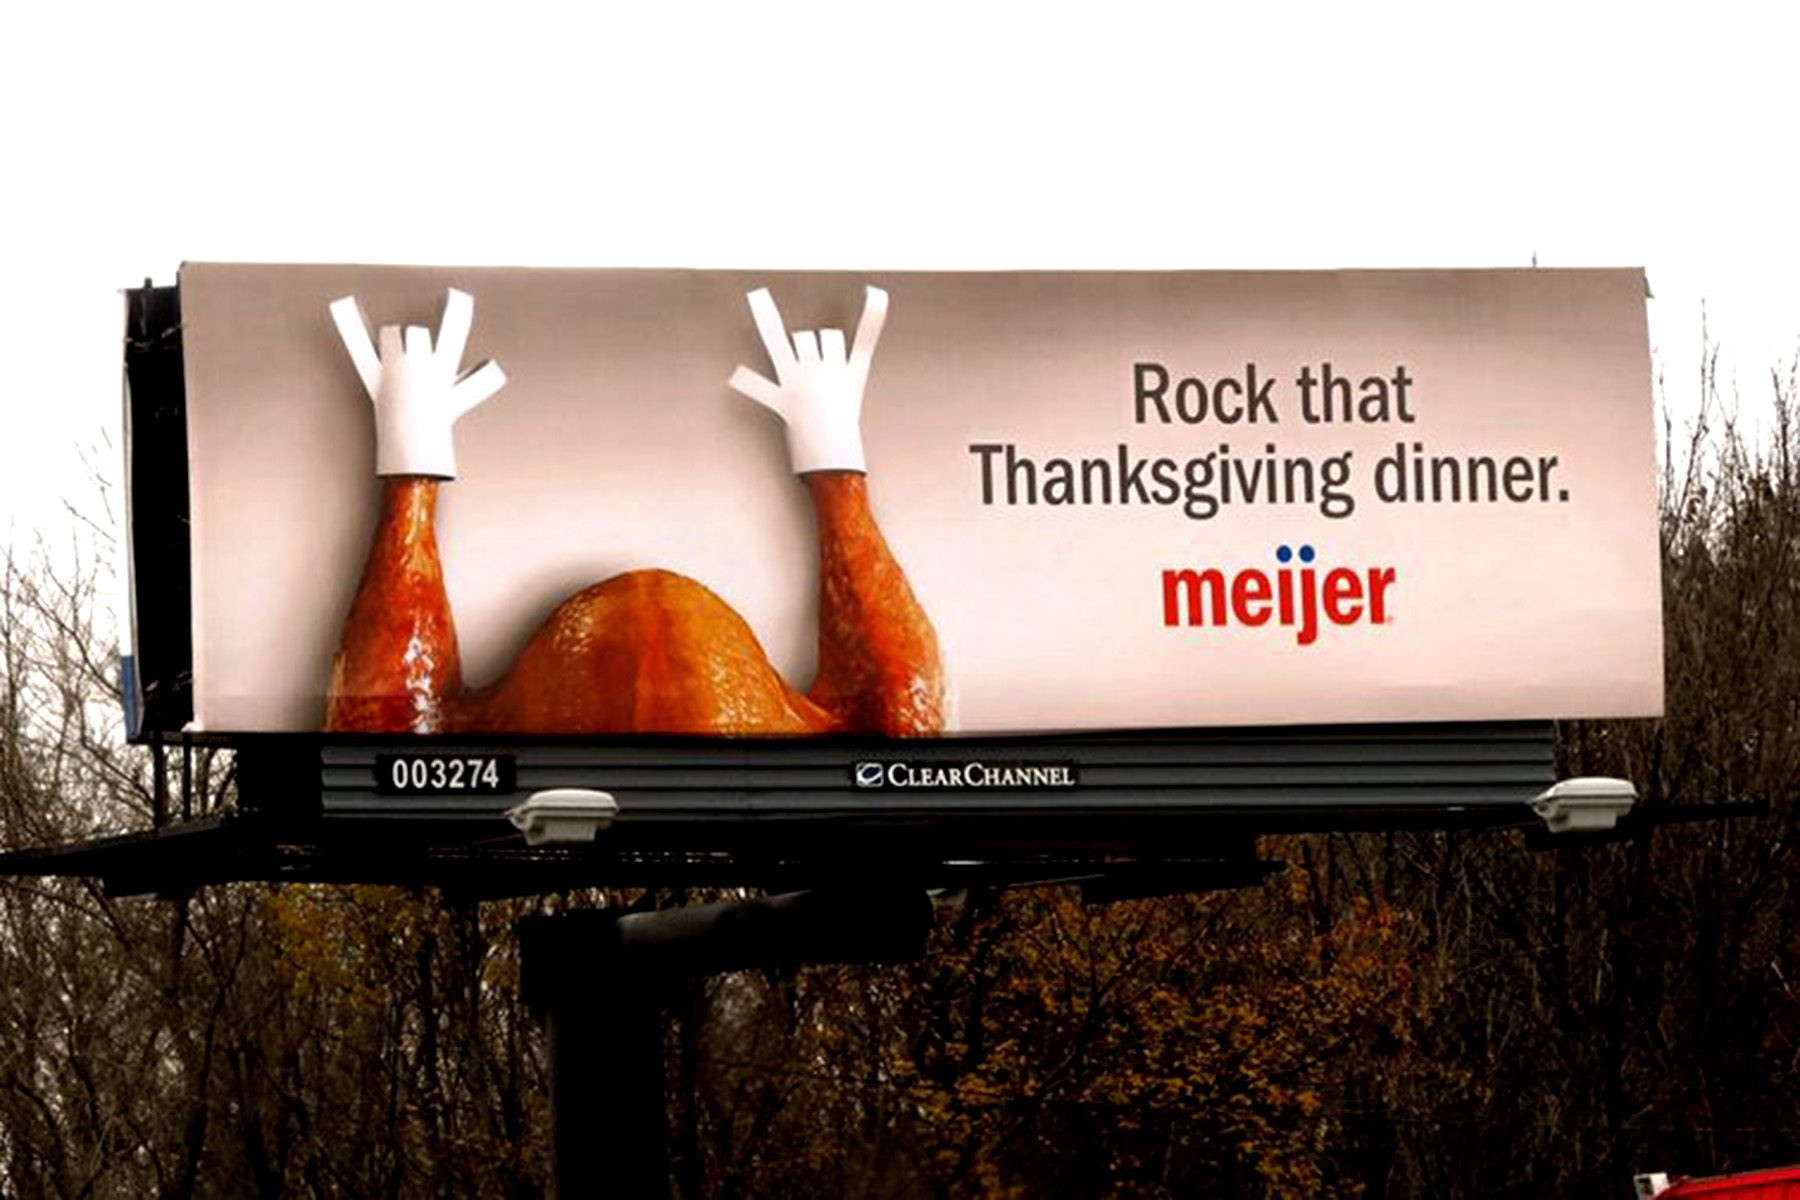 Meijer Thanksgiving Dinners
 Meijer billboard "Rock that Thanksgiving dinner